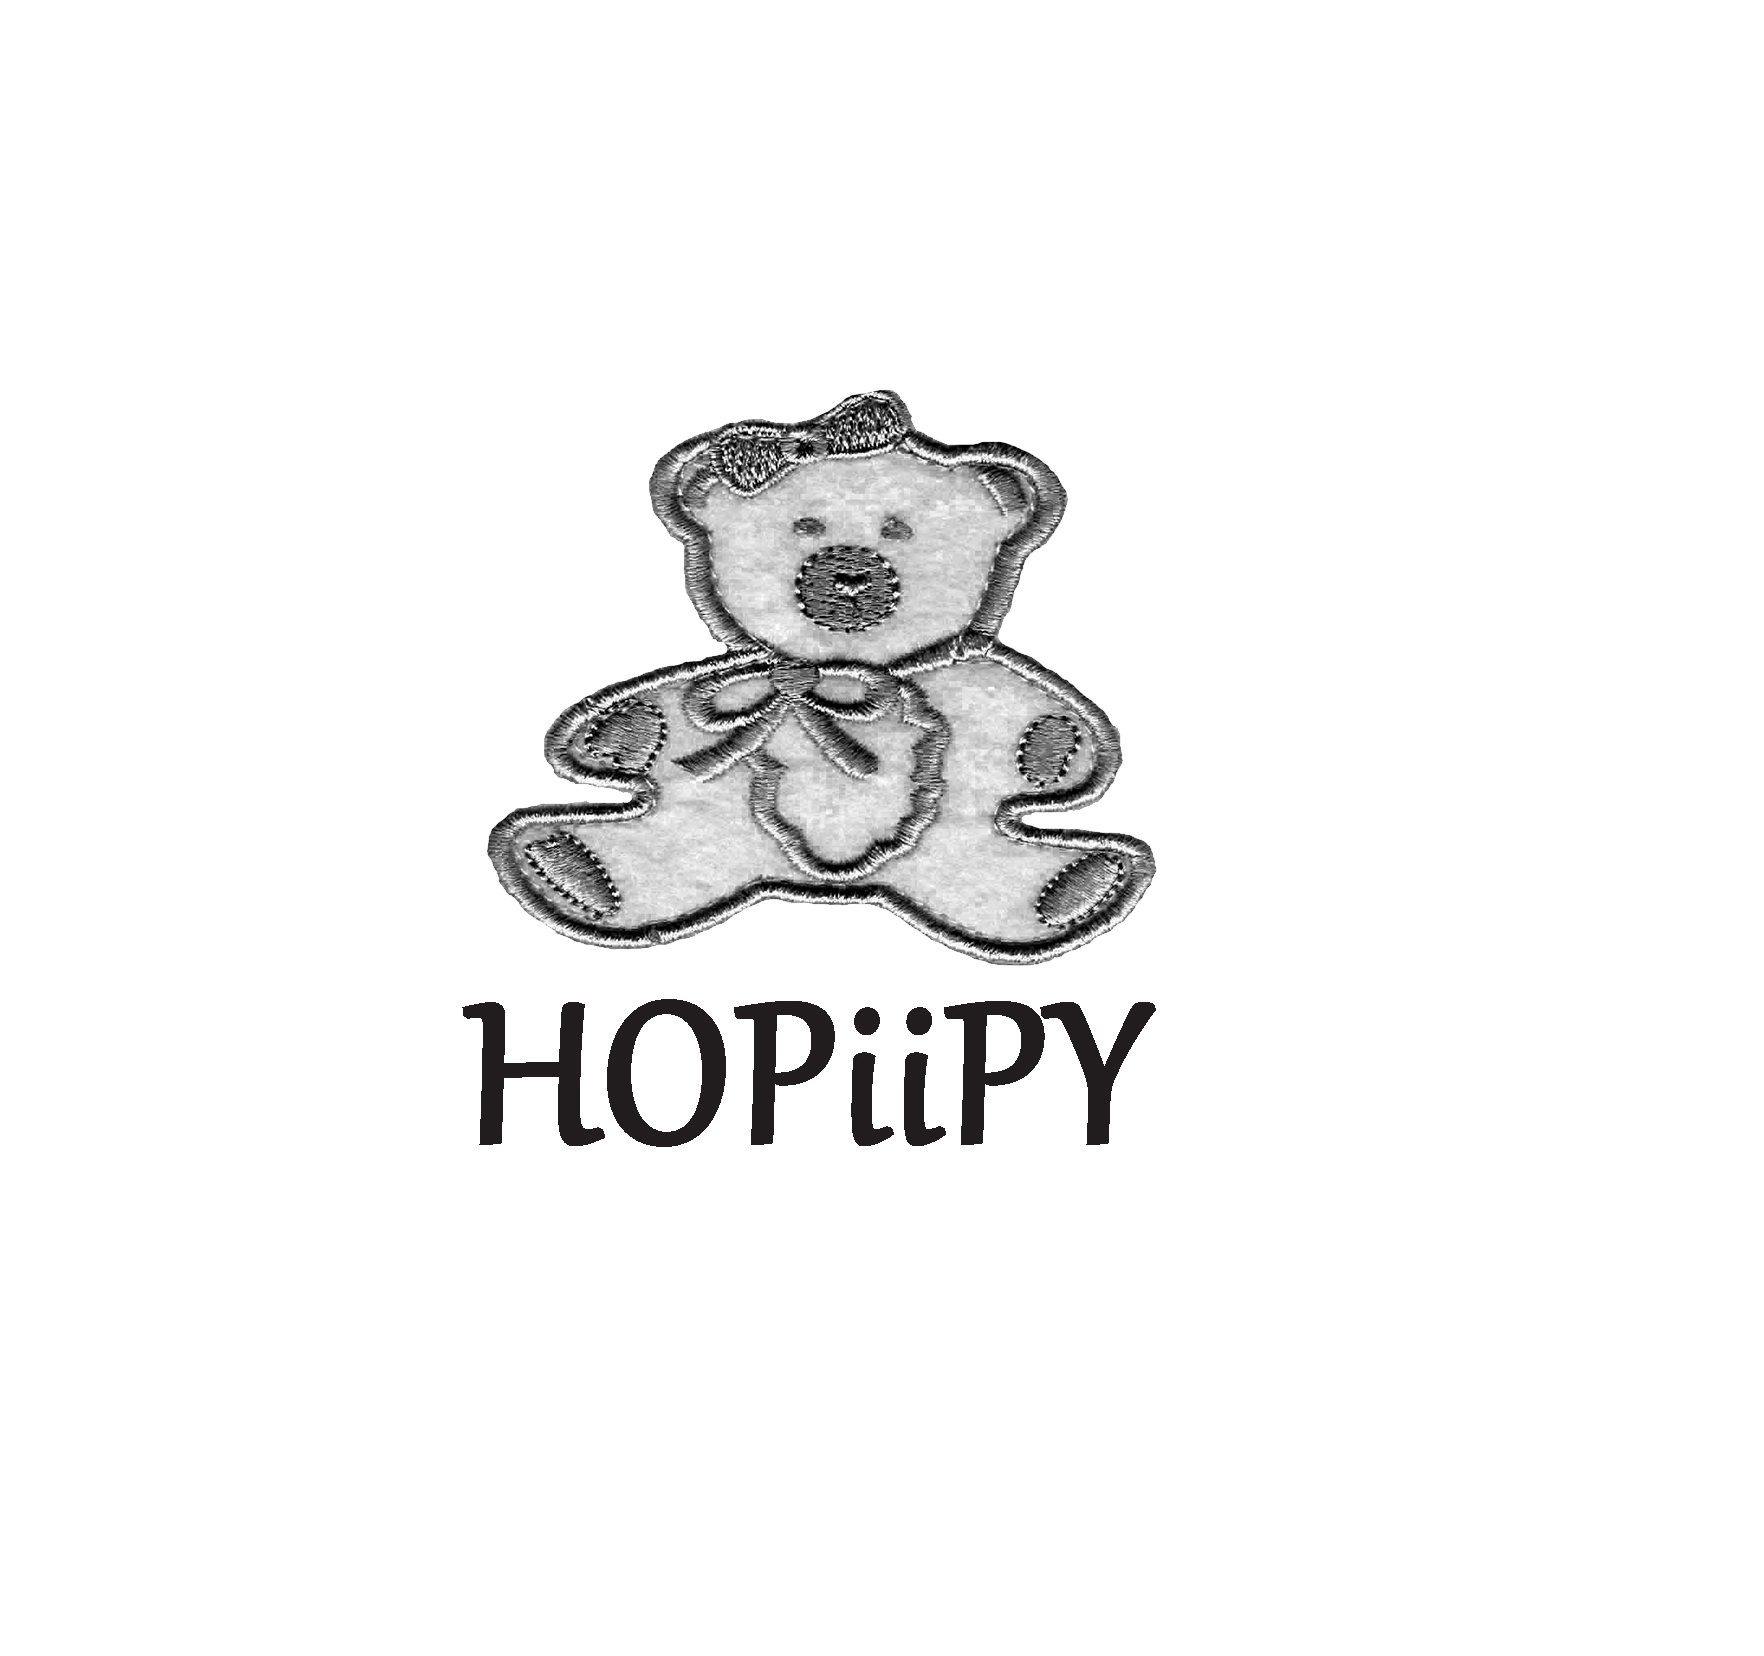  HOPIIPY